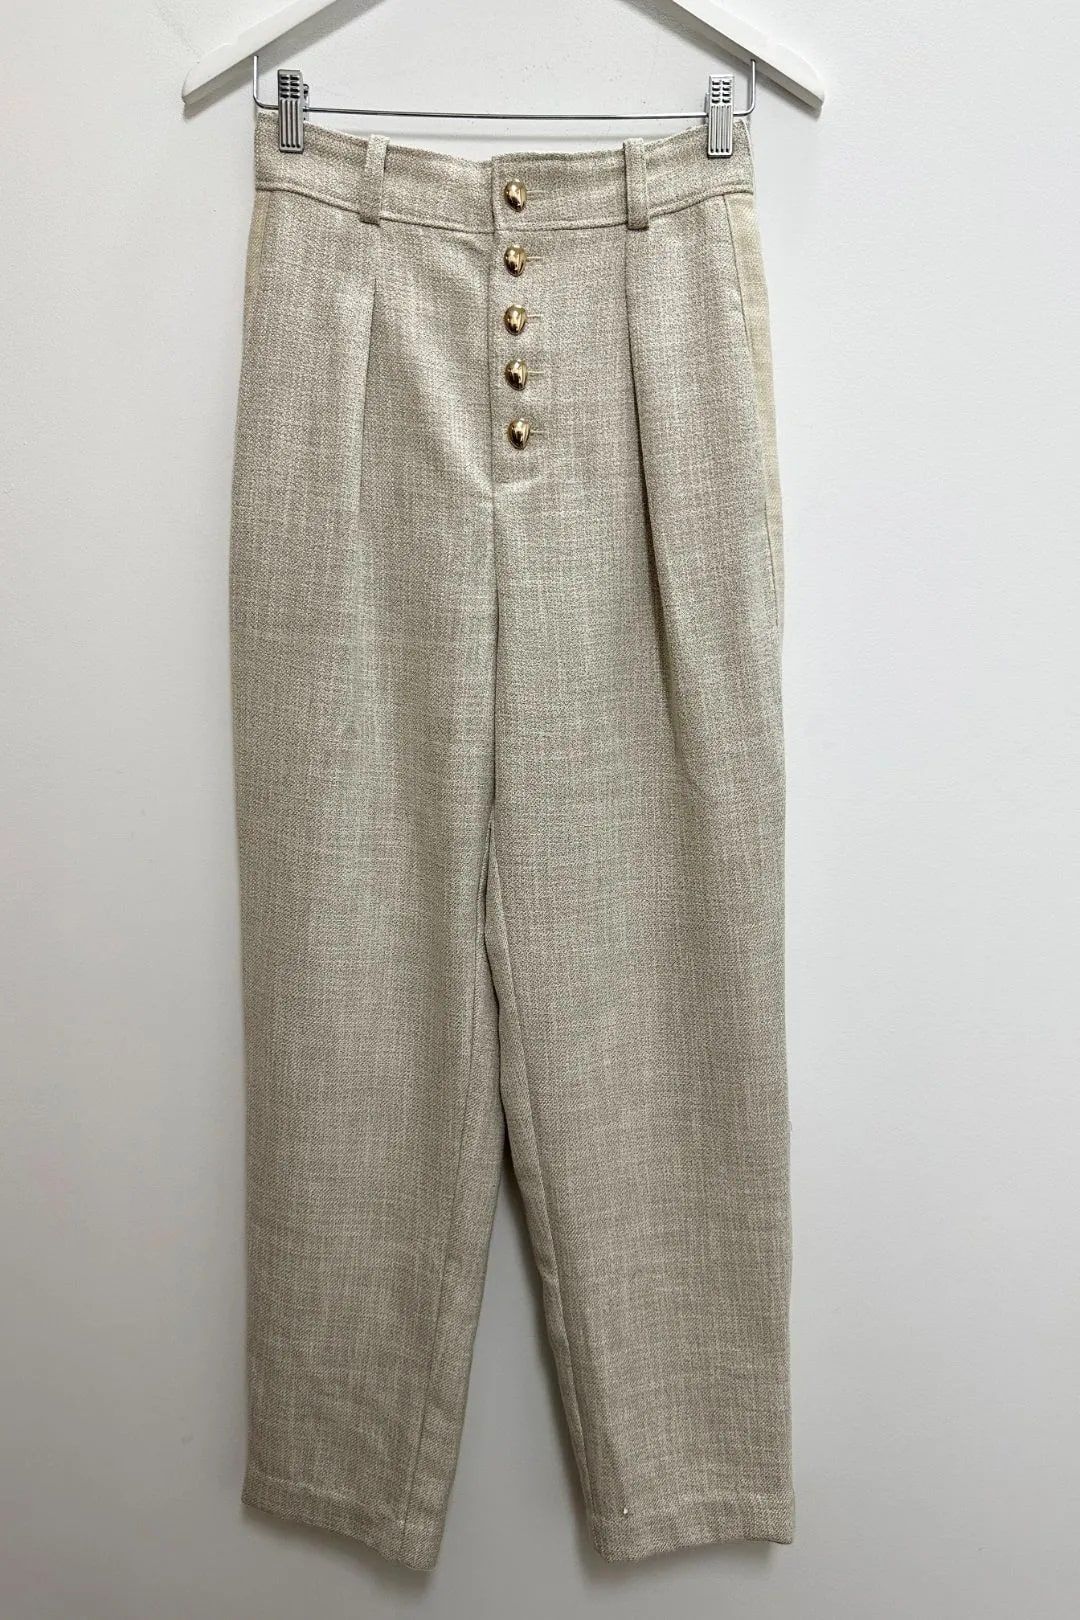 Stylish Acler Tweed High Waist Pants in Beige, buy now